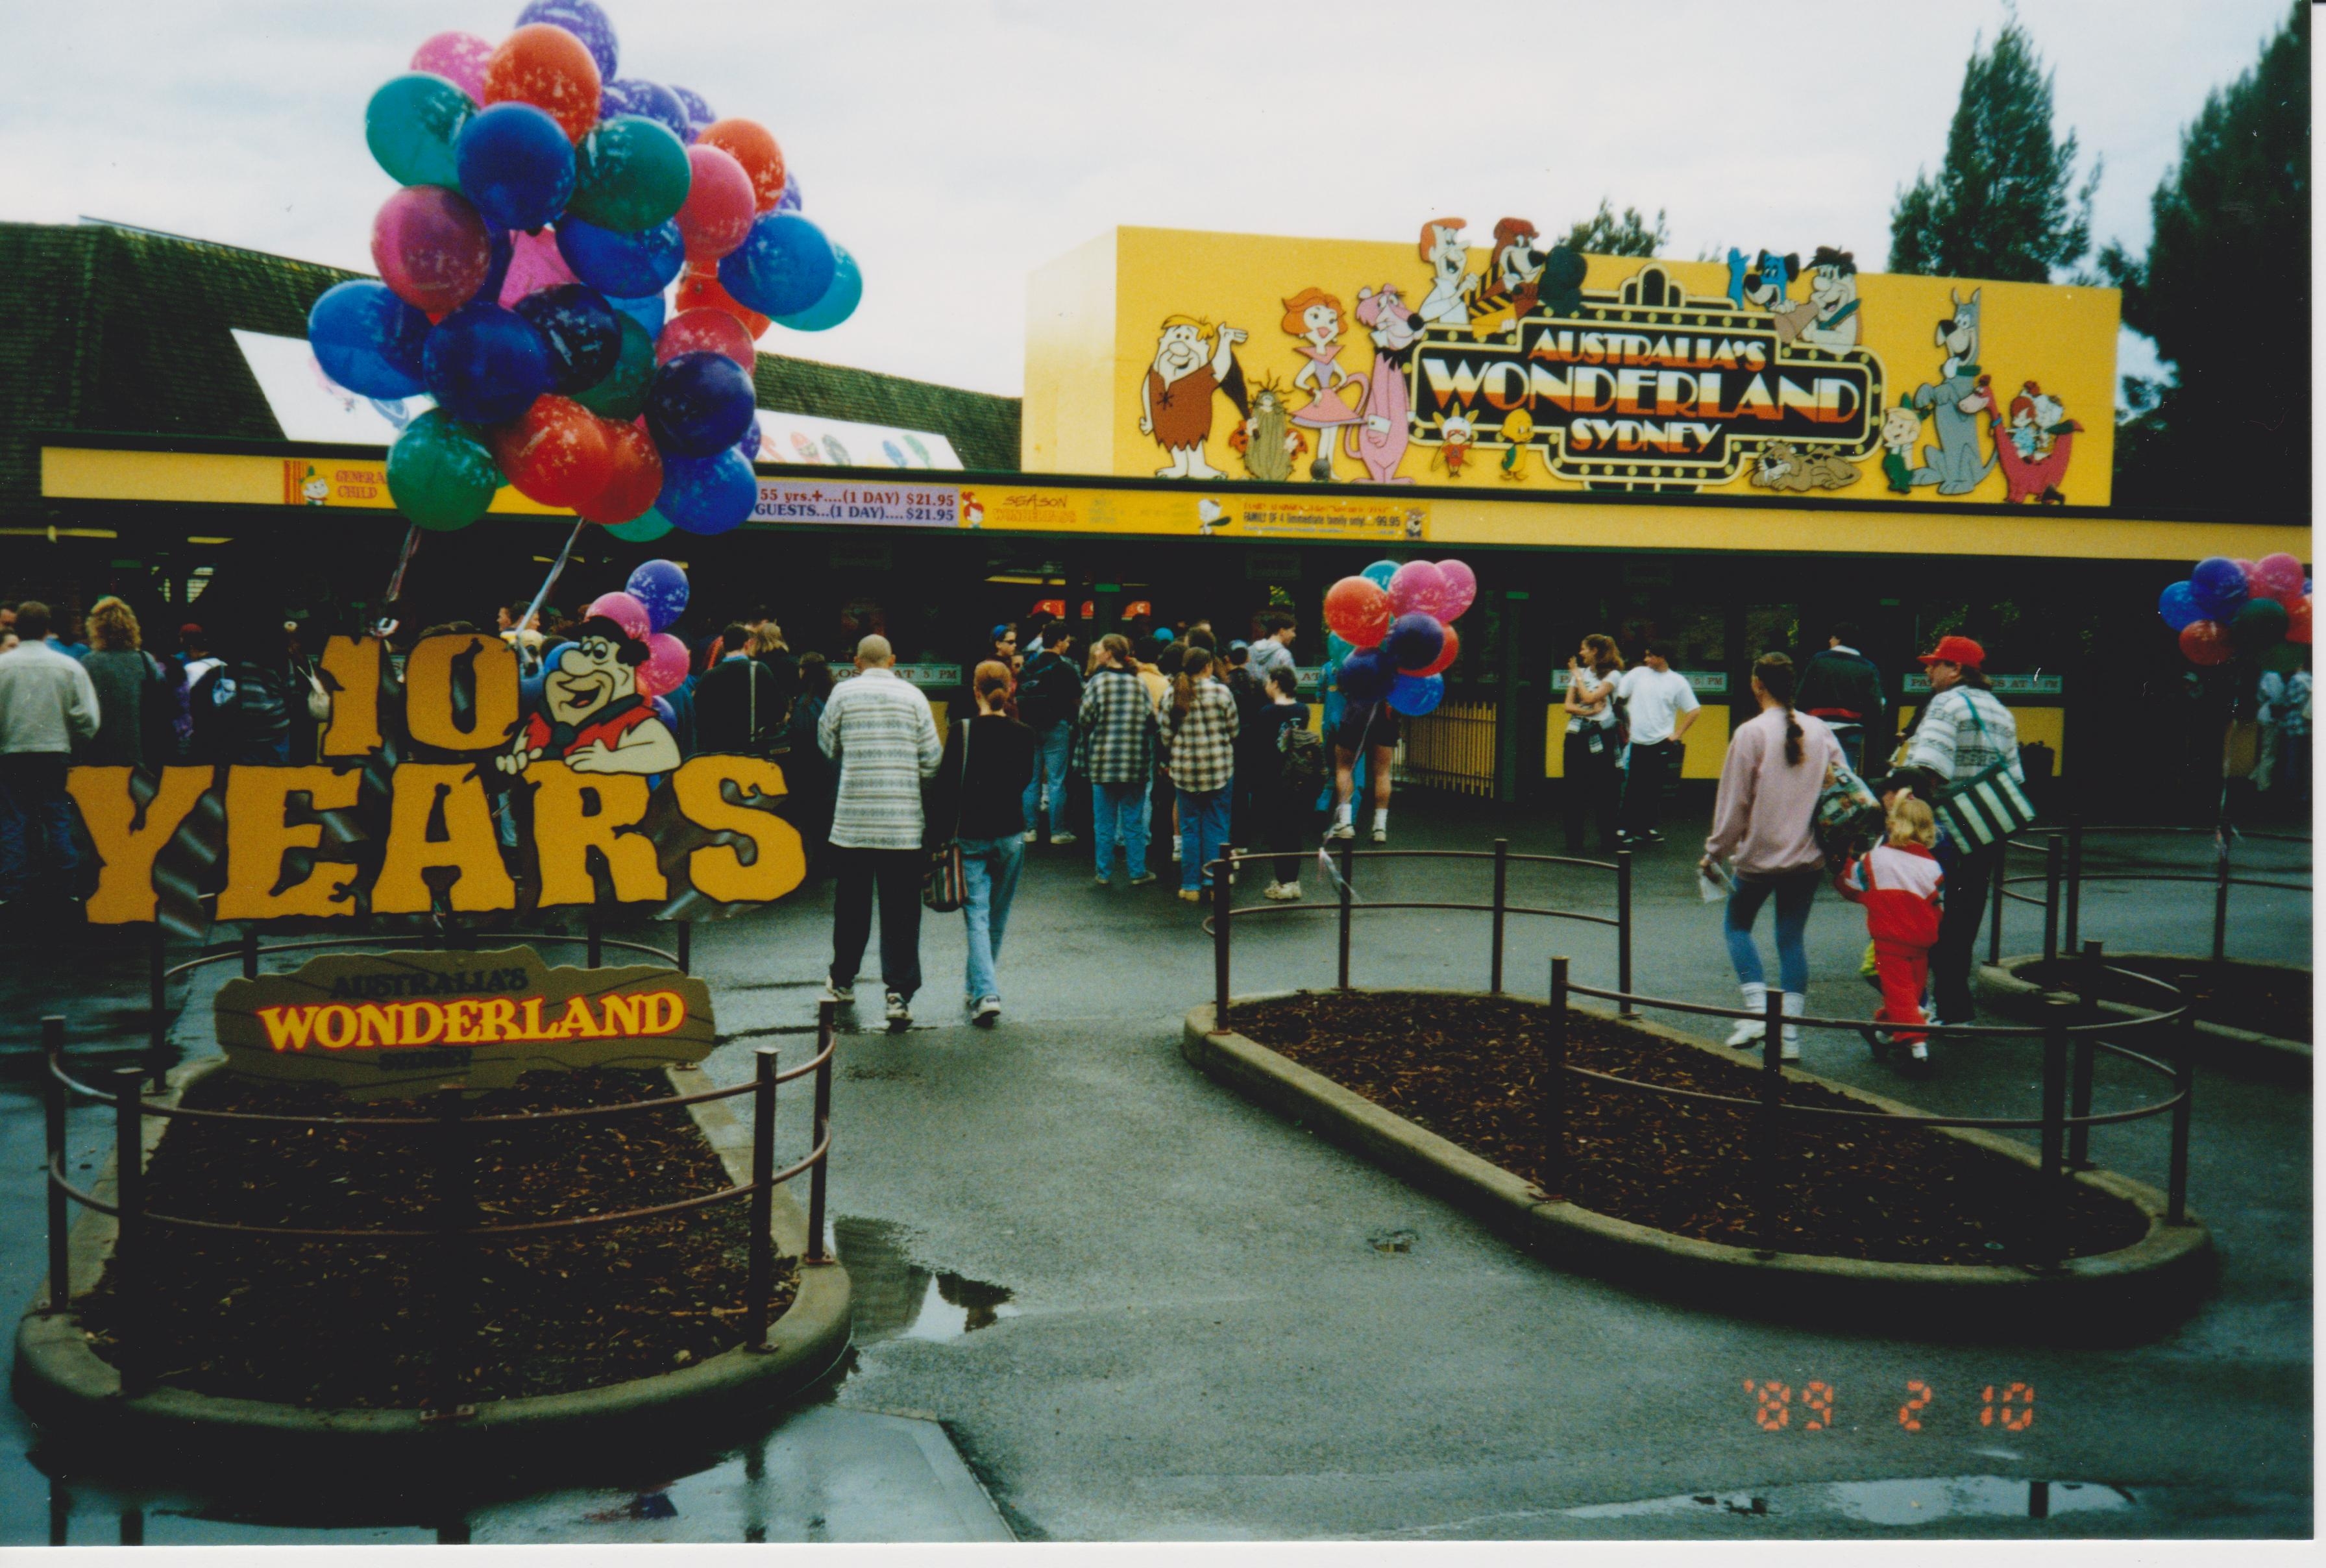 Australia's Theme Park Wonderland